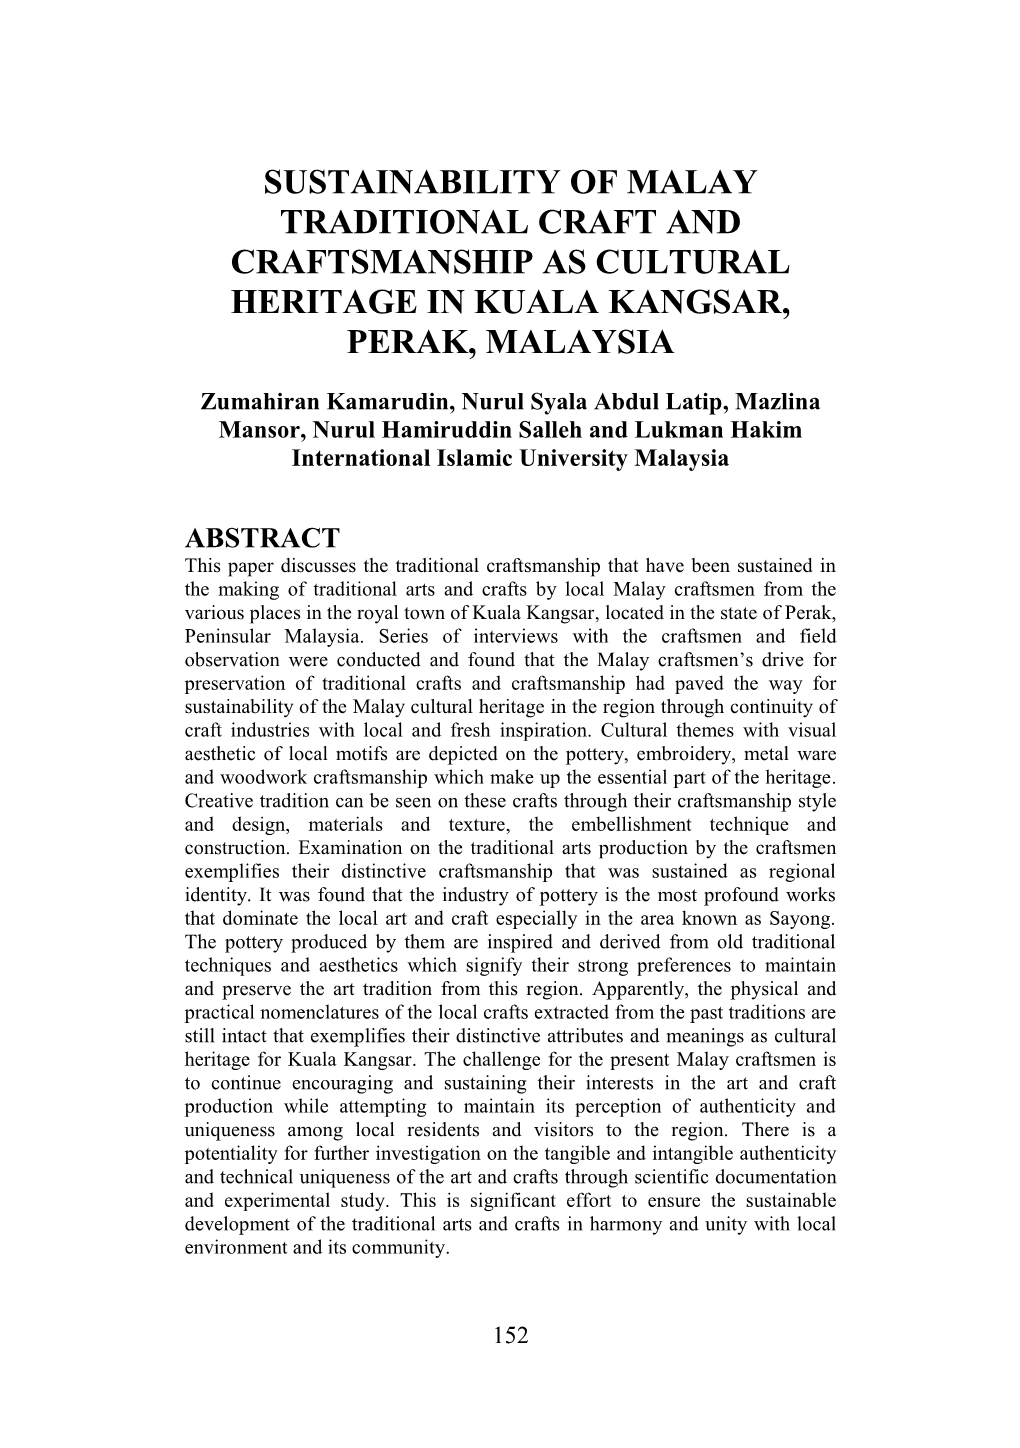 Sustainability of Malay Traditional Craft and Craftsmanship As Cultural Heritage in Kuala Kangsar, Perak, Malaysia